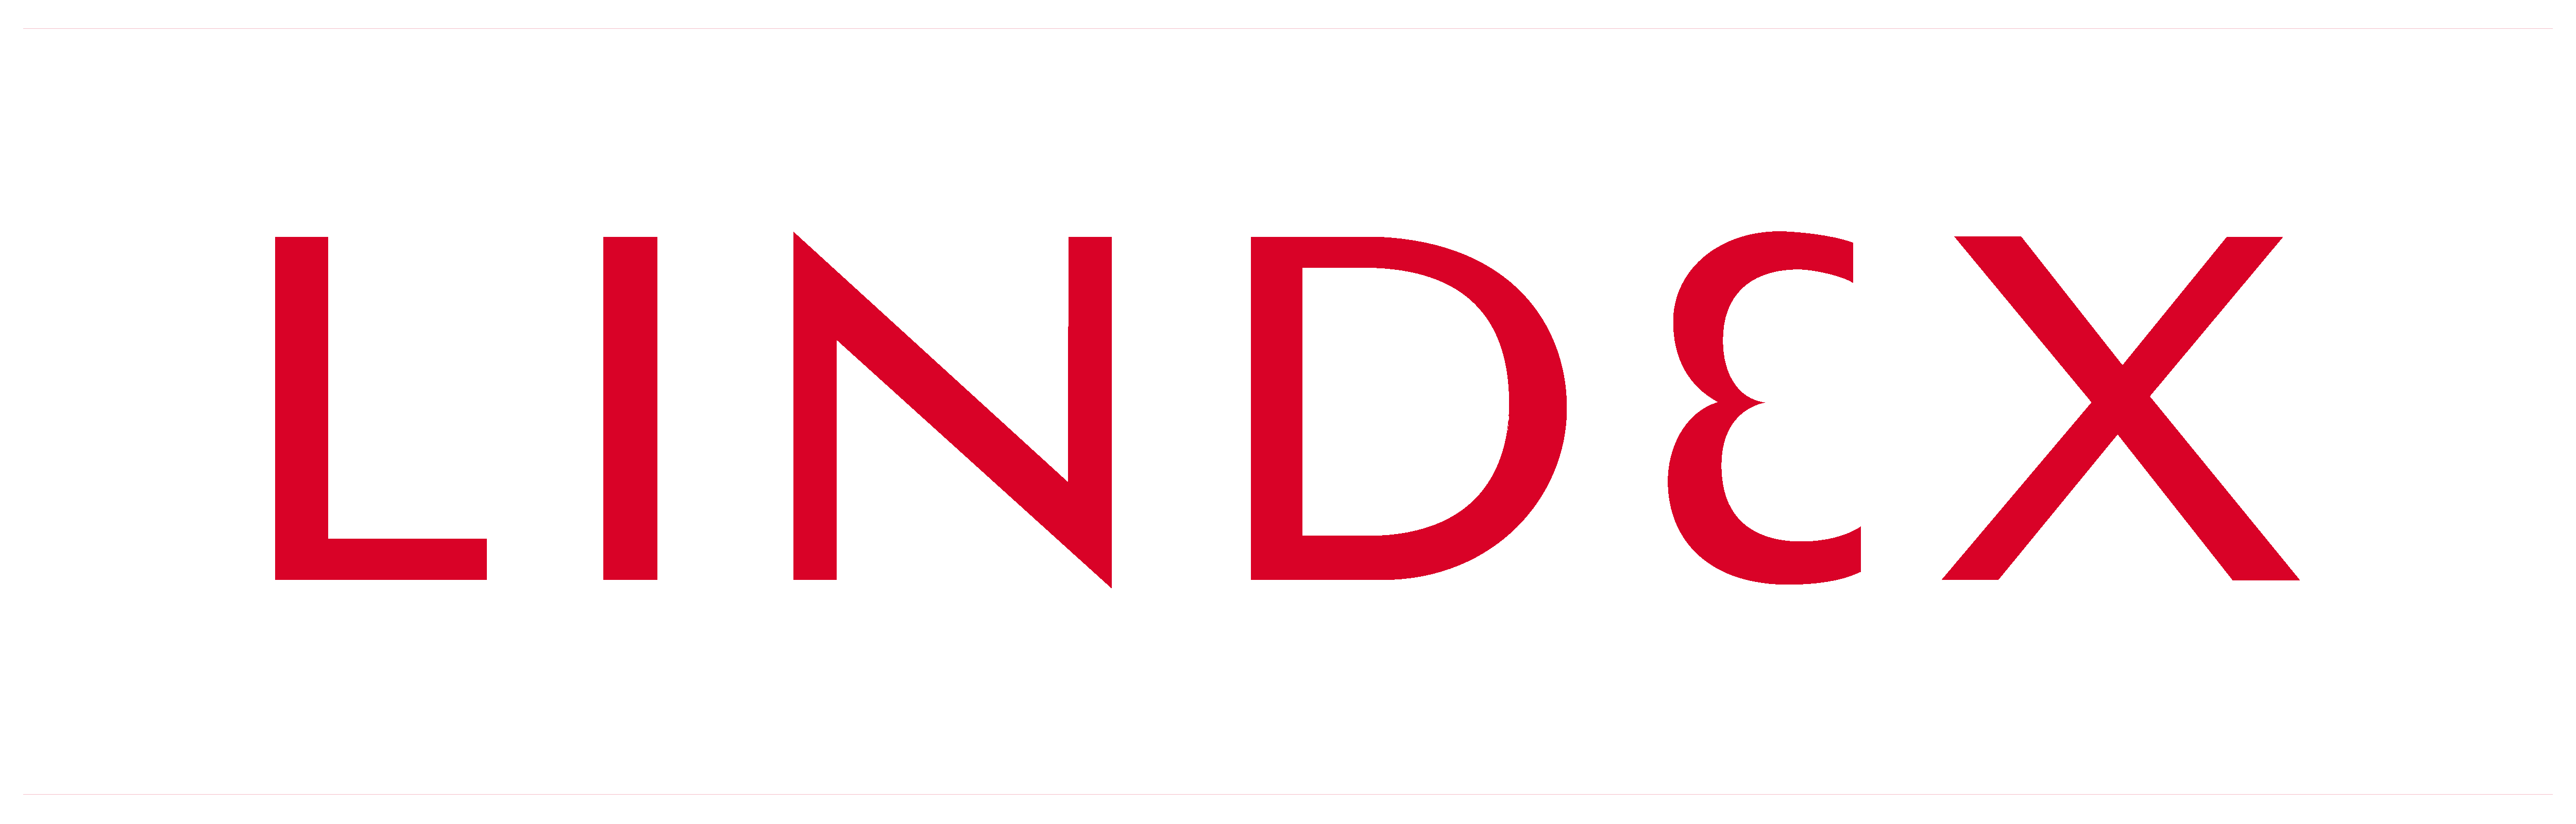 https://1000logos.net/wp-content/uploads/2020/09/Lindex-logo.png